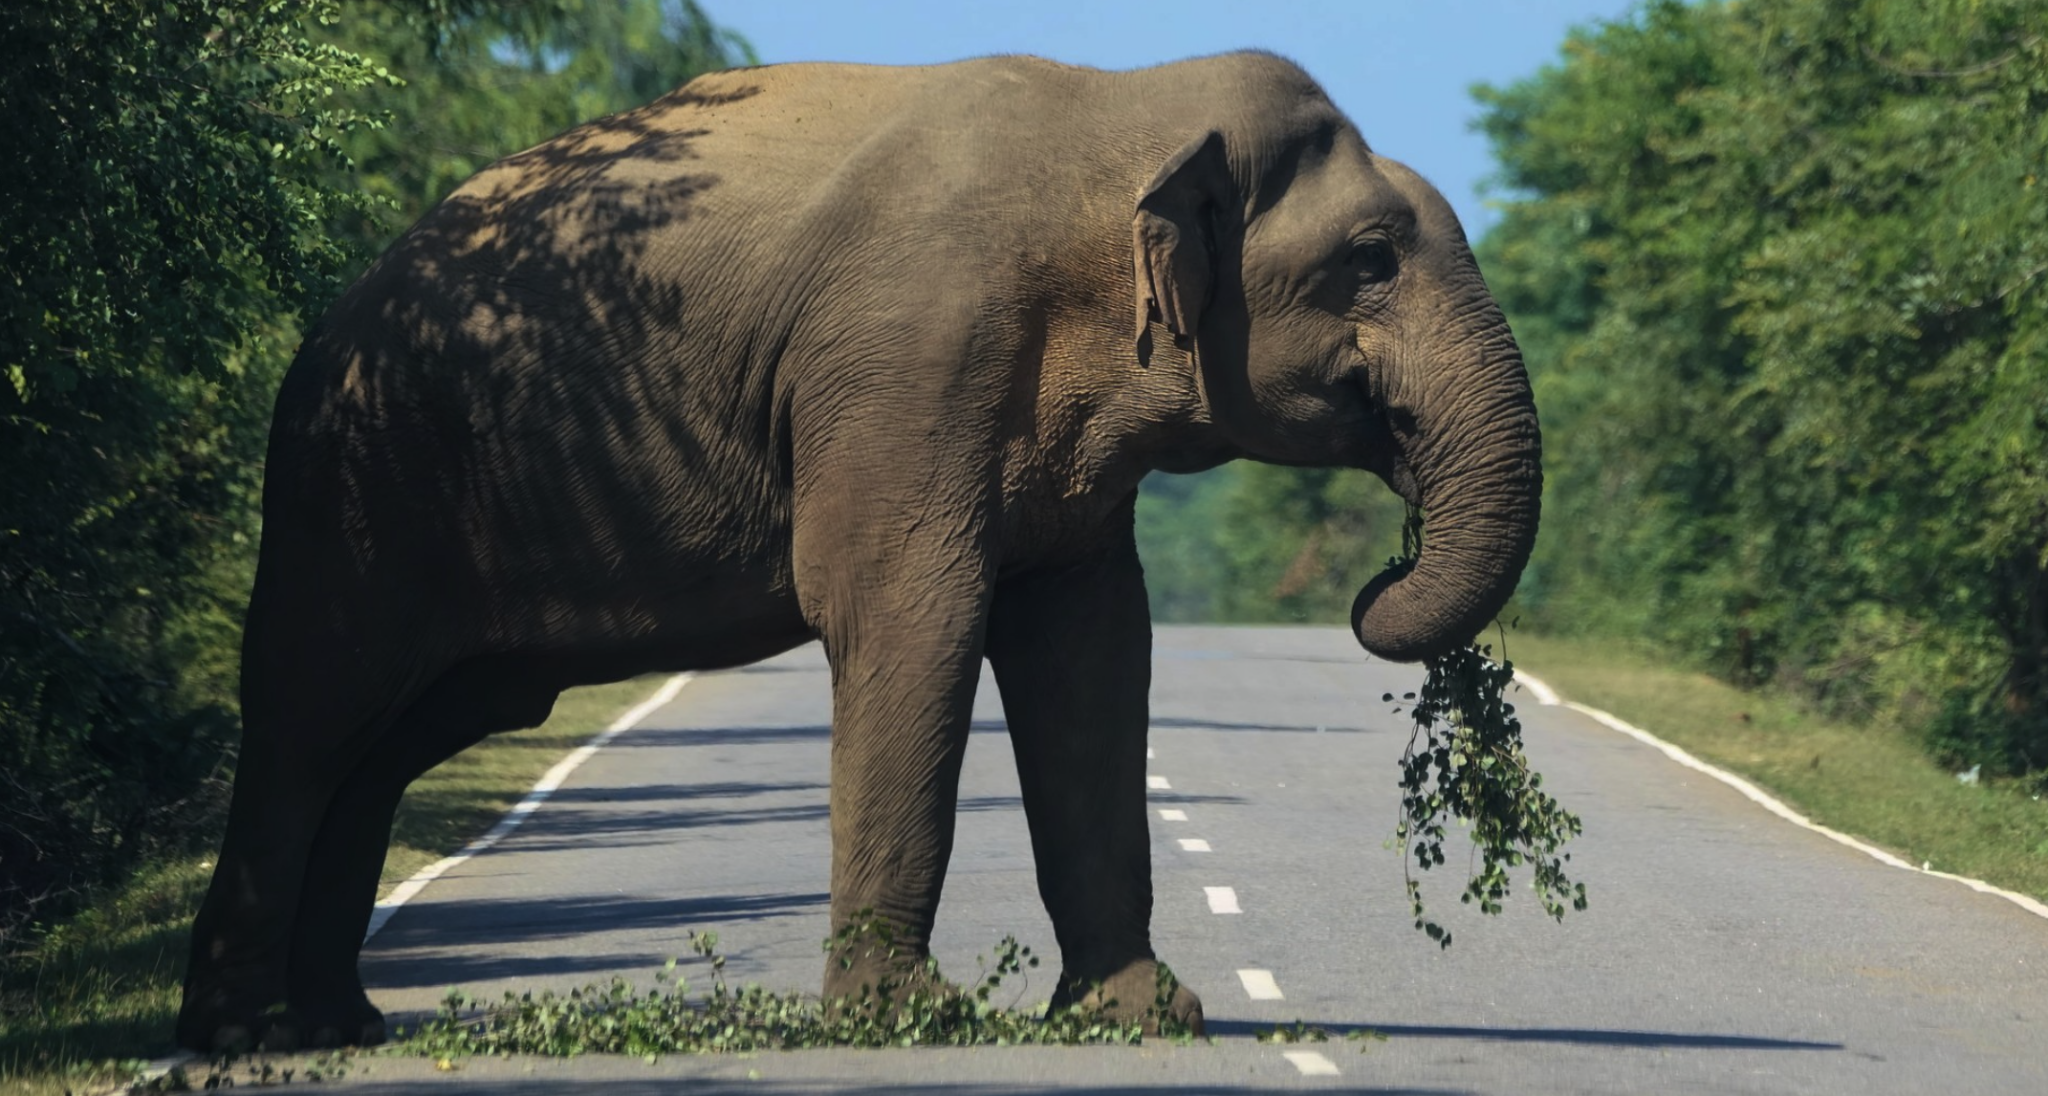 An elephant on the road in Sri Lanka